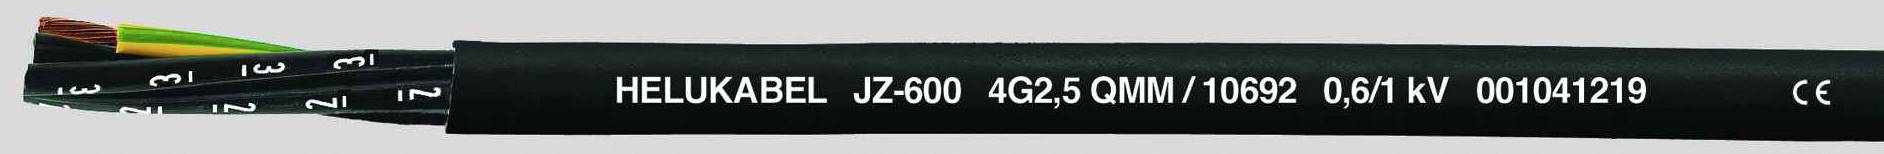 HELUKABEL JZ-600 Steuerleitung 3 G 0.50 mm² Schwarz 10551-1000 1000 m